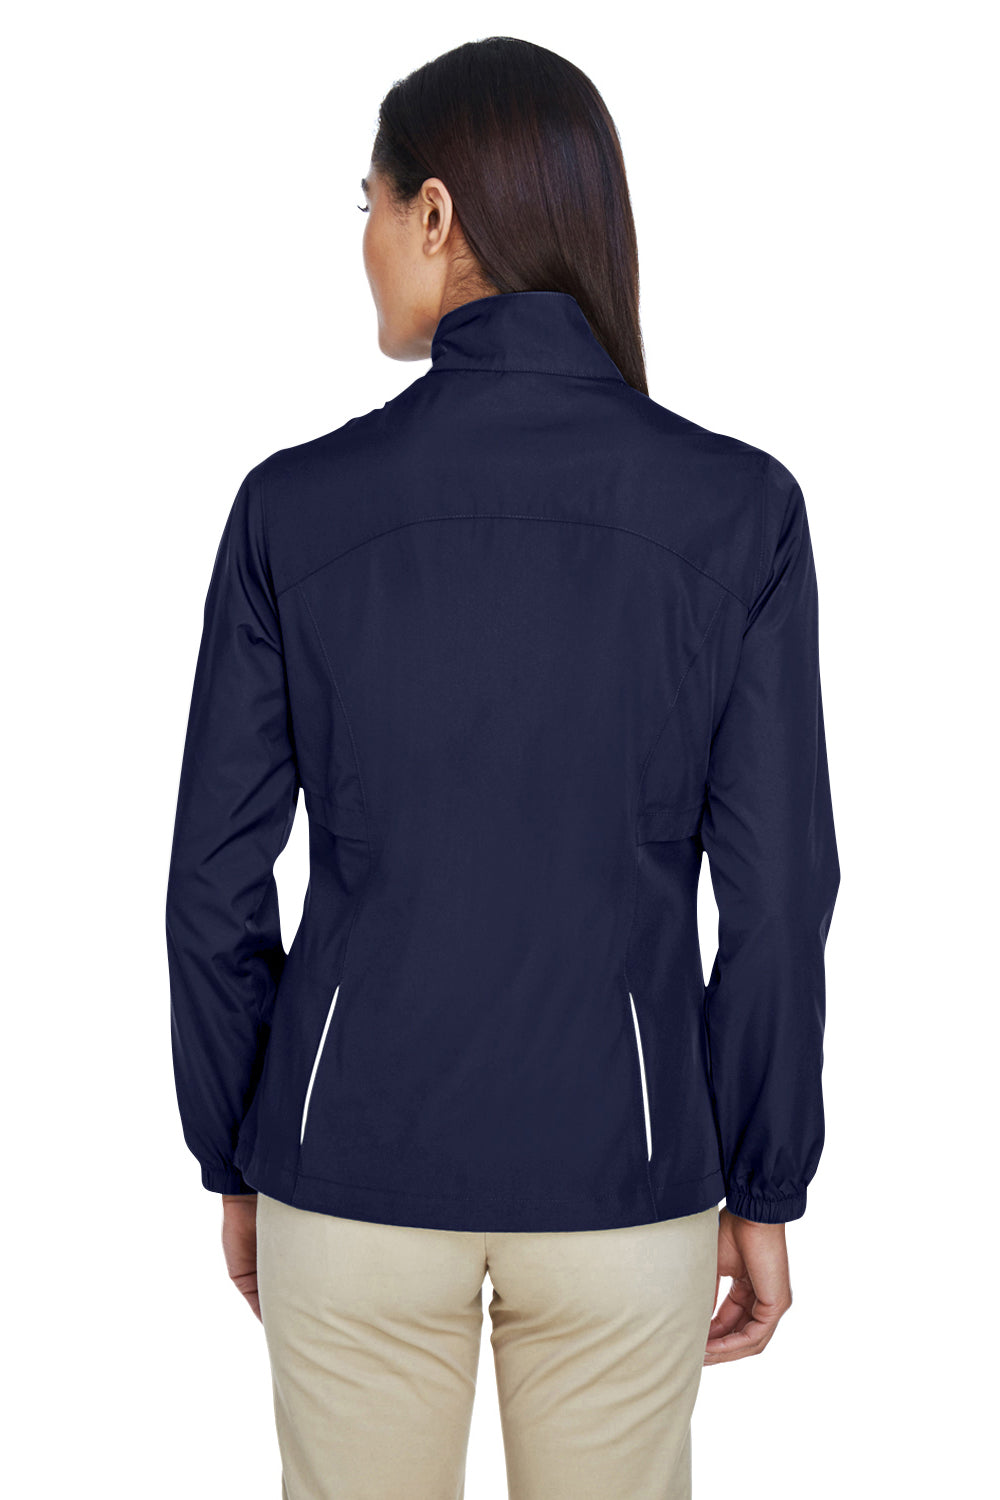 Core 365 78183 Womens Motivate Water Resistant Full Zip Jacket Navy Blue Back